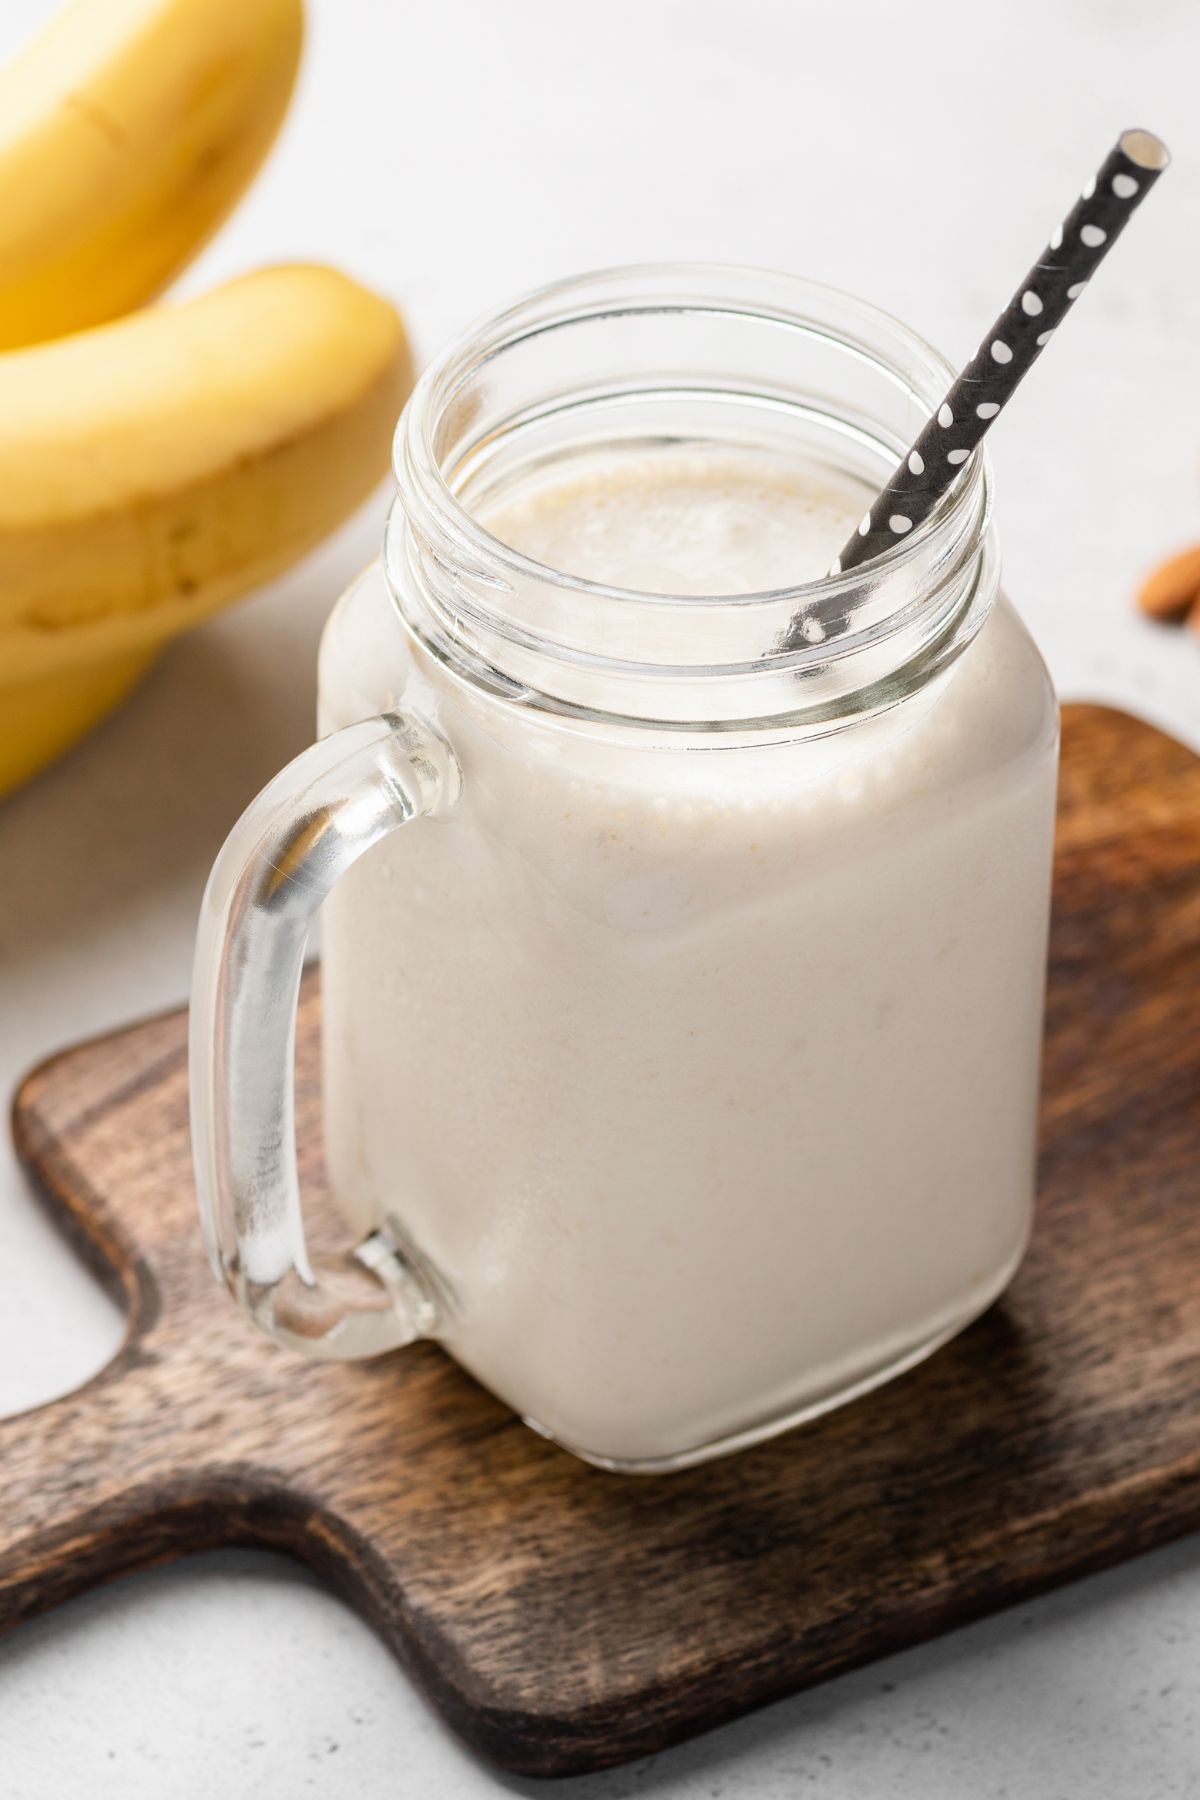 Protein shake in glass mason jar with black straw next to bananas.